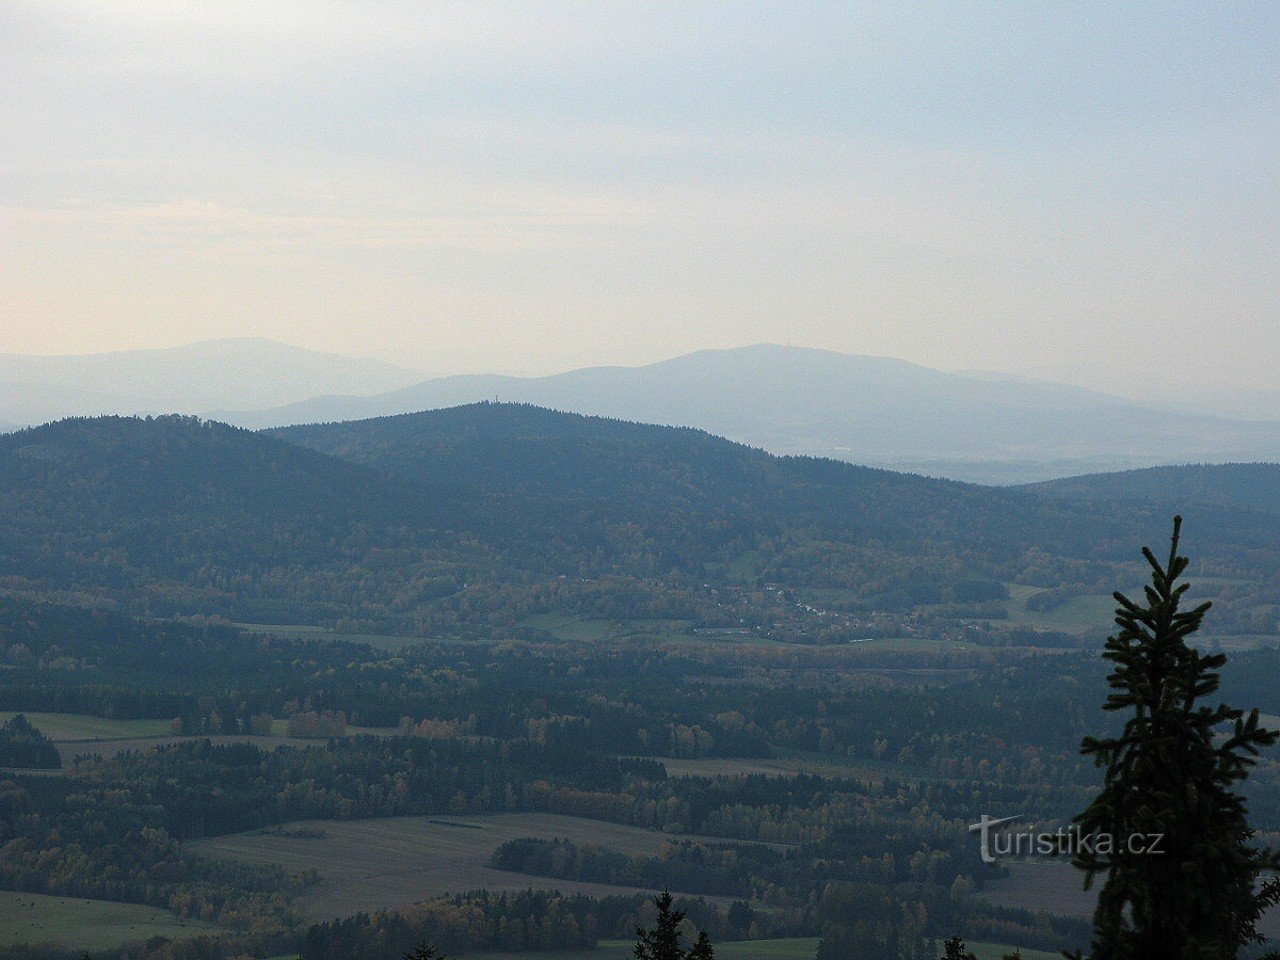 Slepíčí hory von Kráví hora (Kleť im Hintergrund)